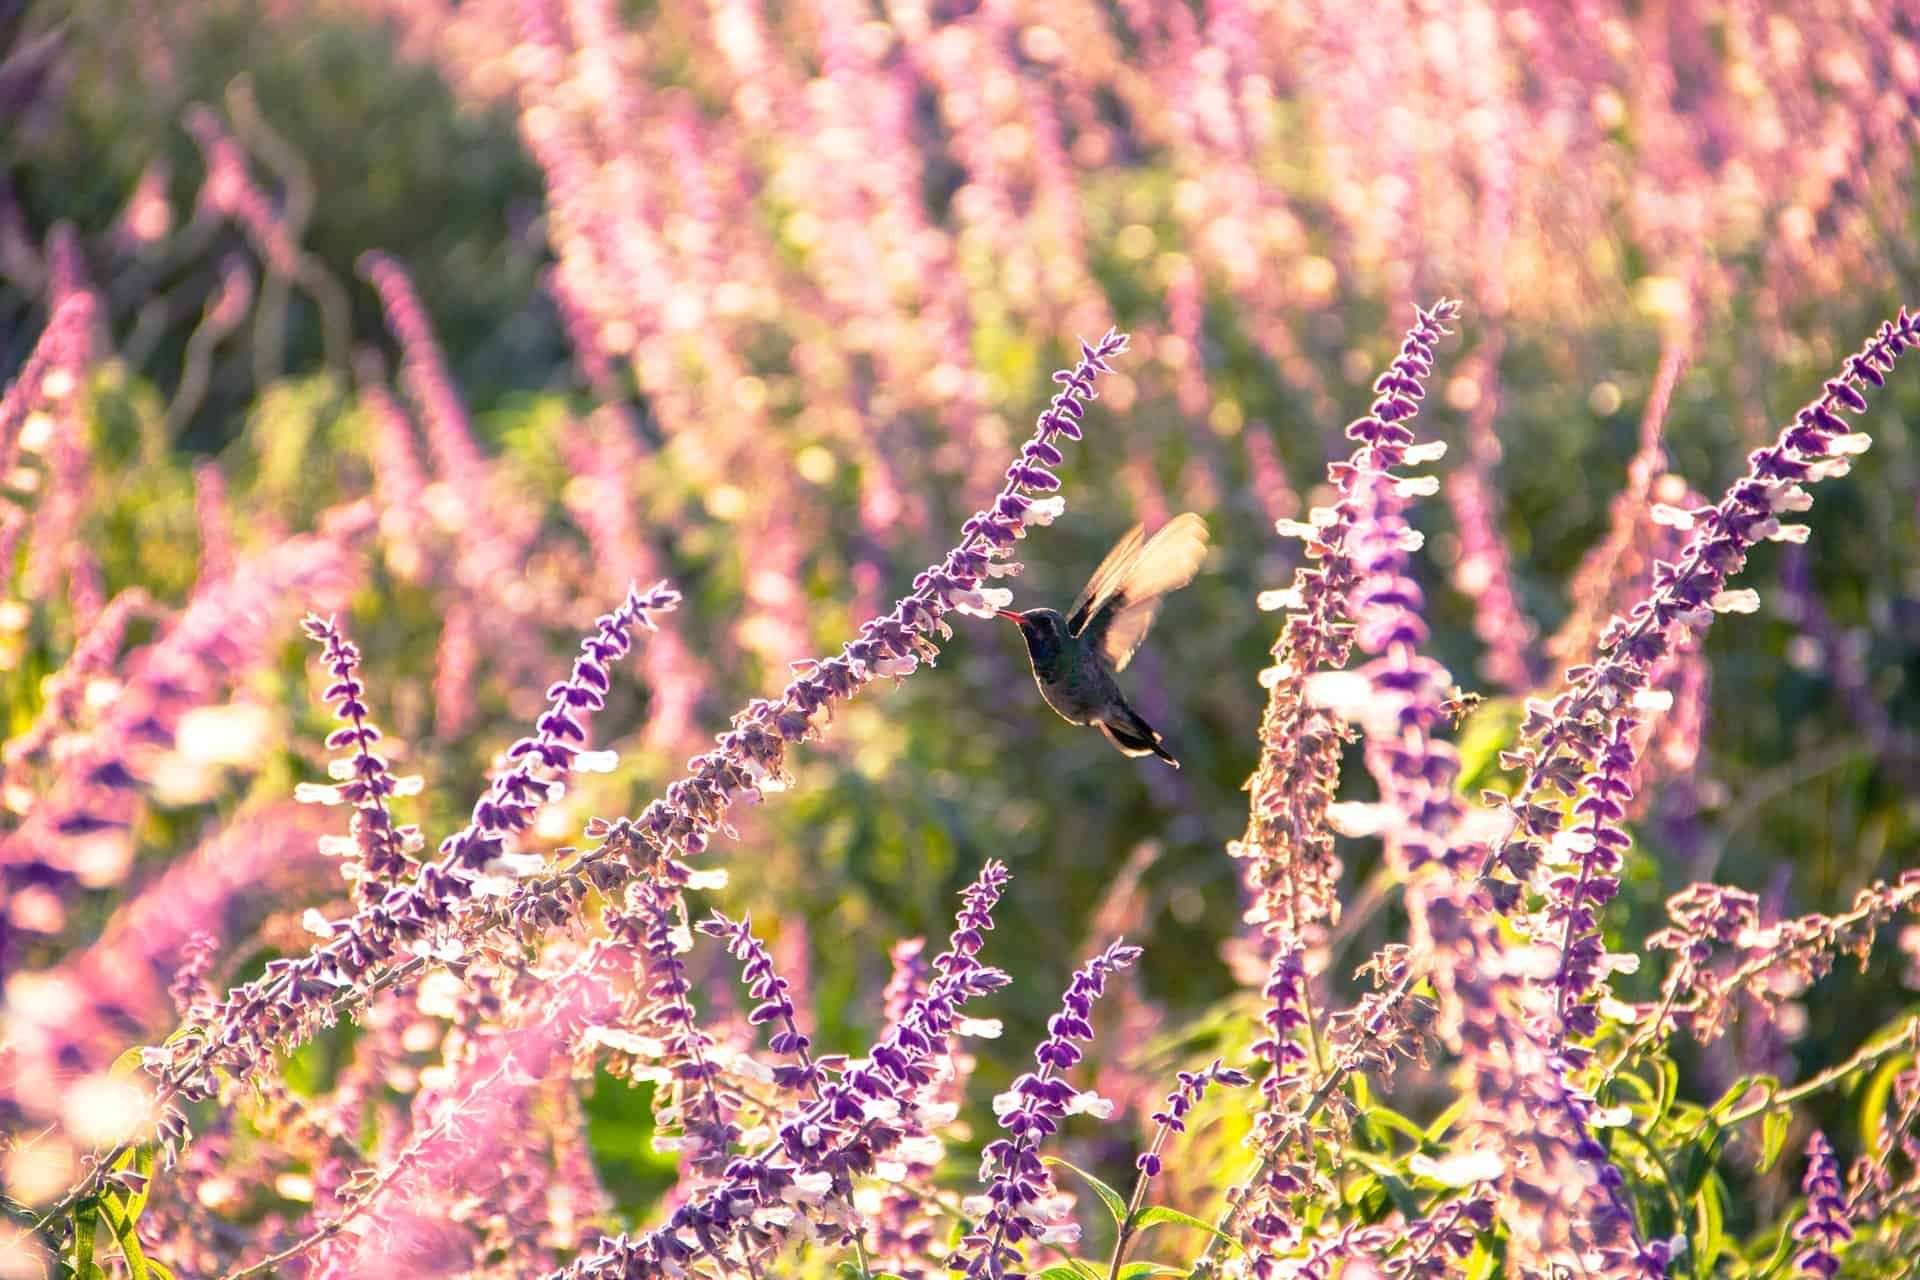 Green and White Hummingbird Pollinating Purple Flowers